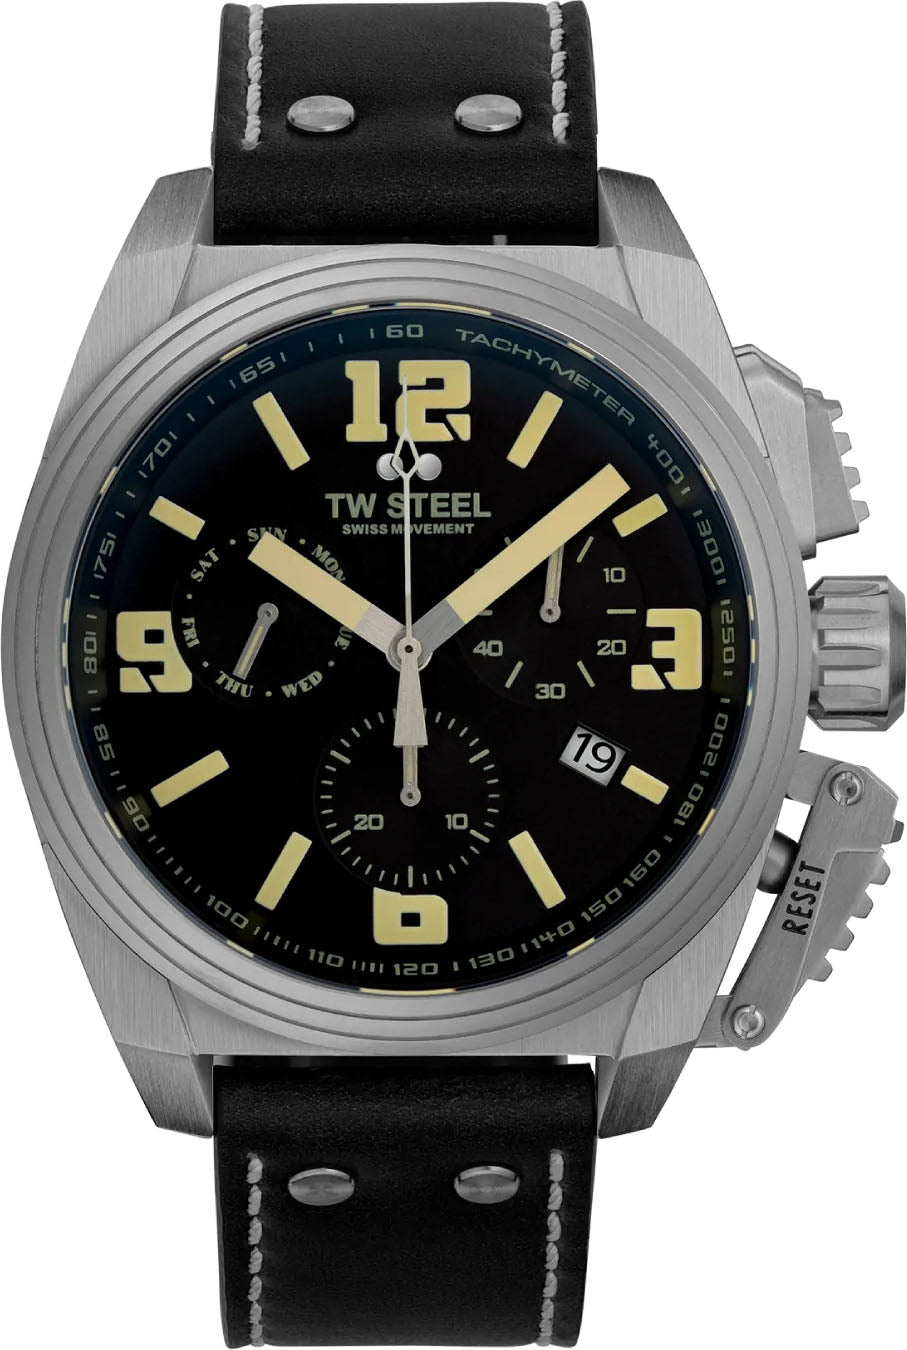 Photos - Wrist Watch TW Steel Watch Swiss Canteen - Black TW-702 